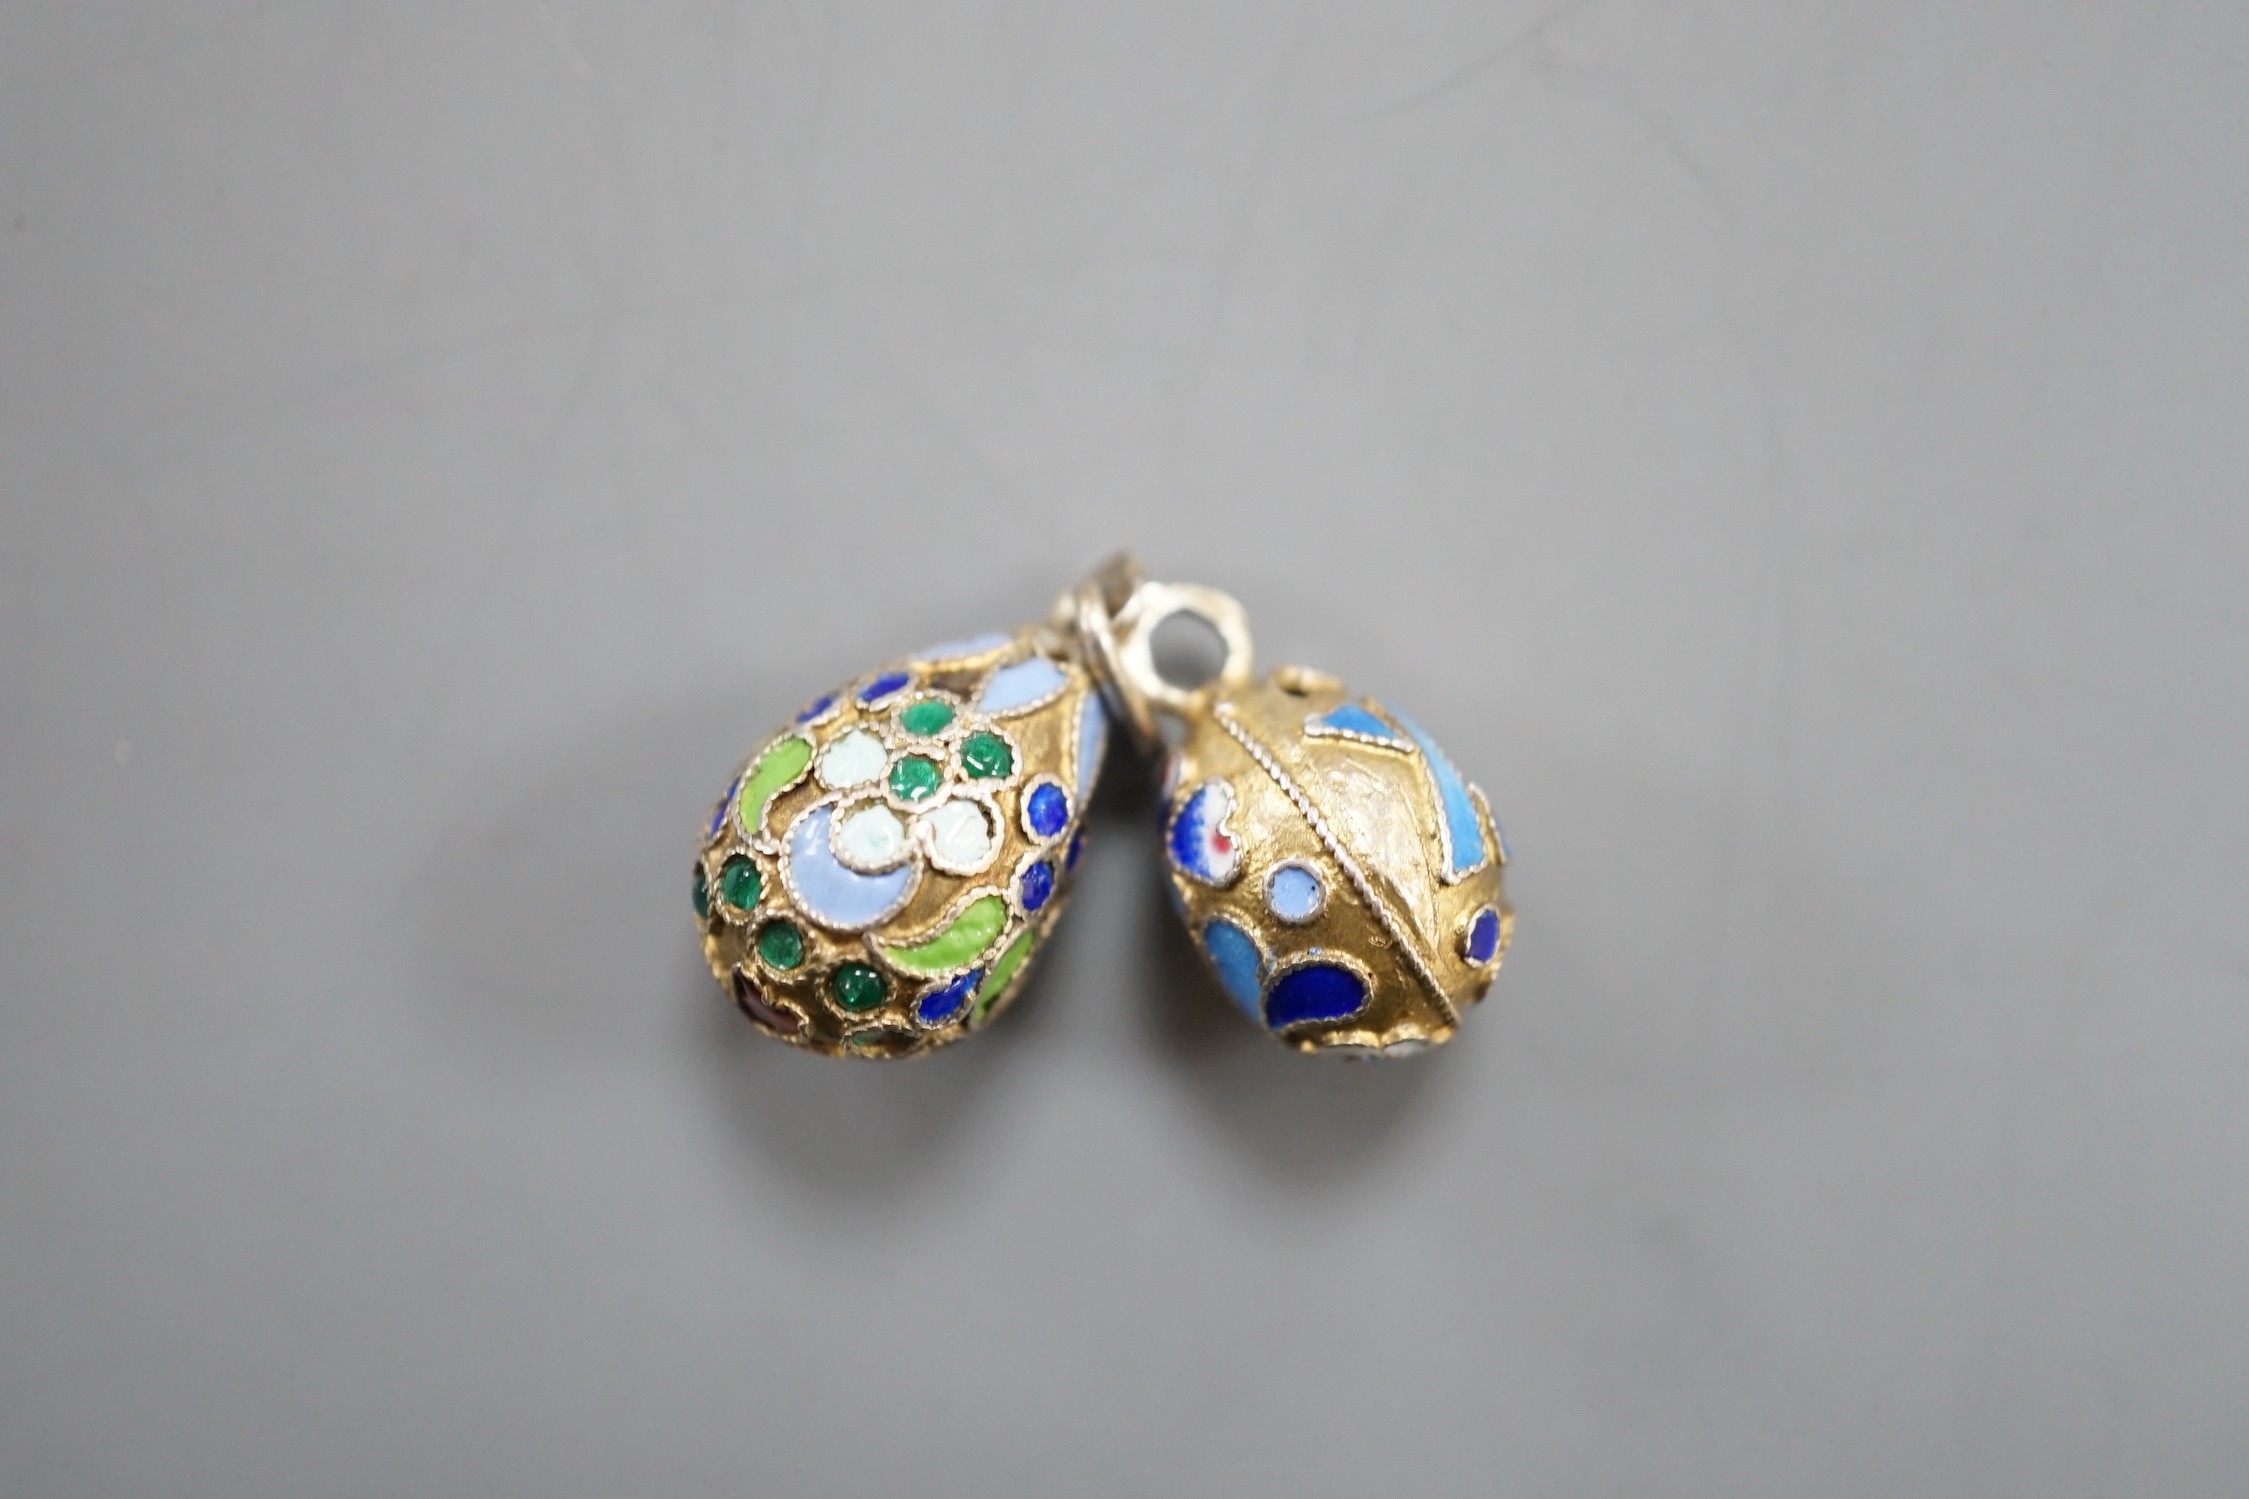 An early 20th century Russian 84 zolotnik and polychrome cloisonné enamel set egg pendant, maker's mark HT?, 17mm and a similar smaller egg pendant, maker's mark HM?.